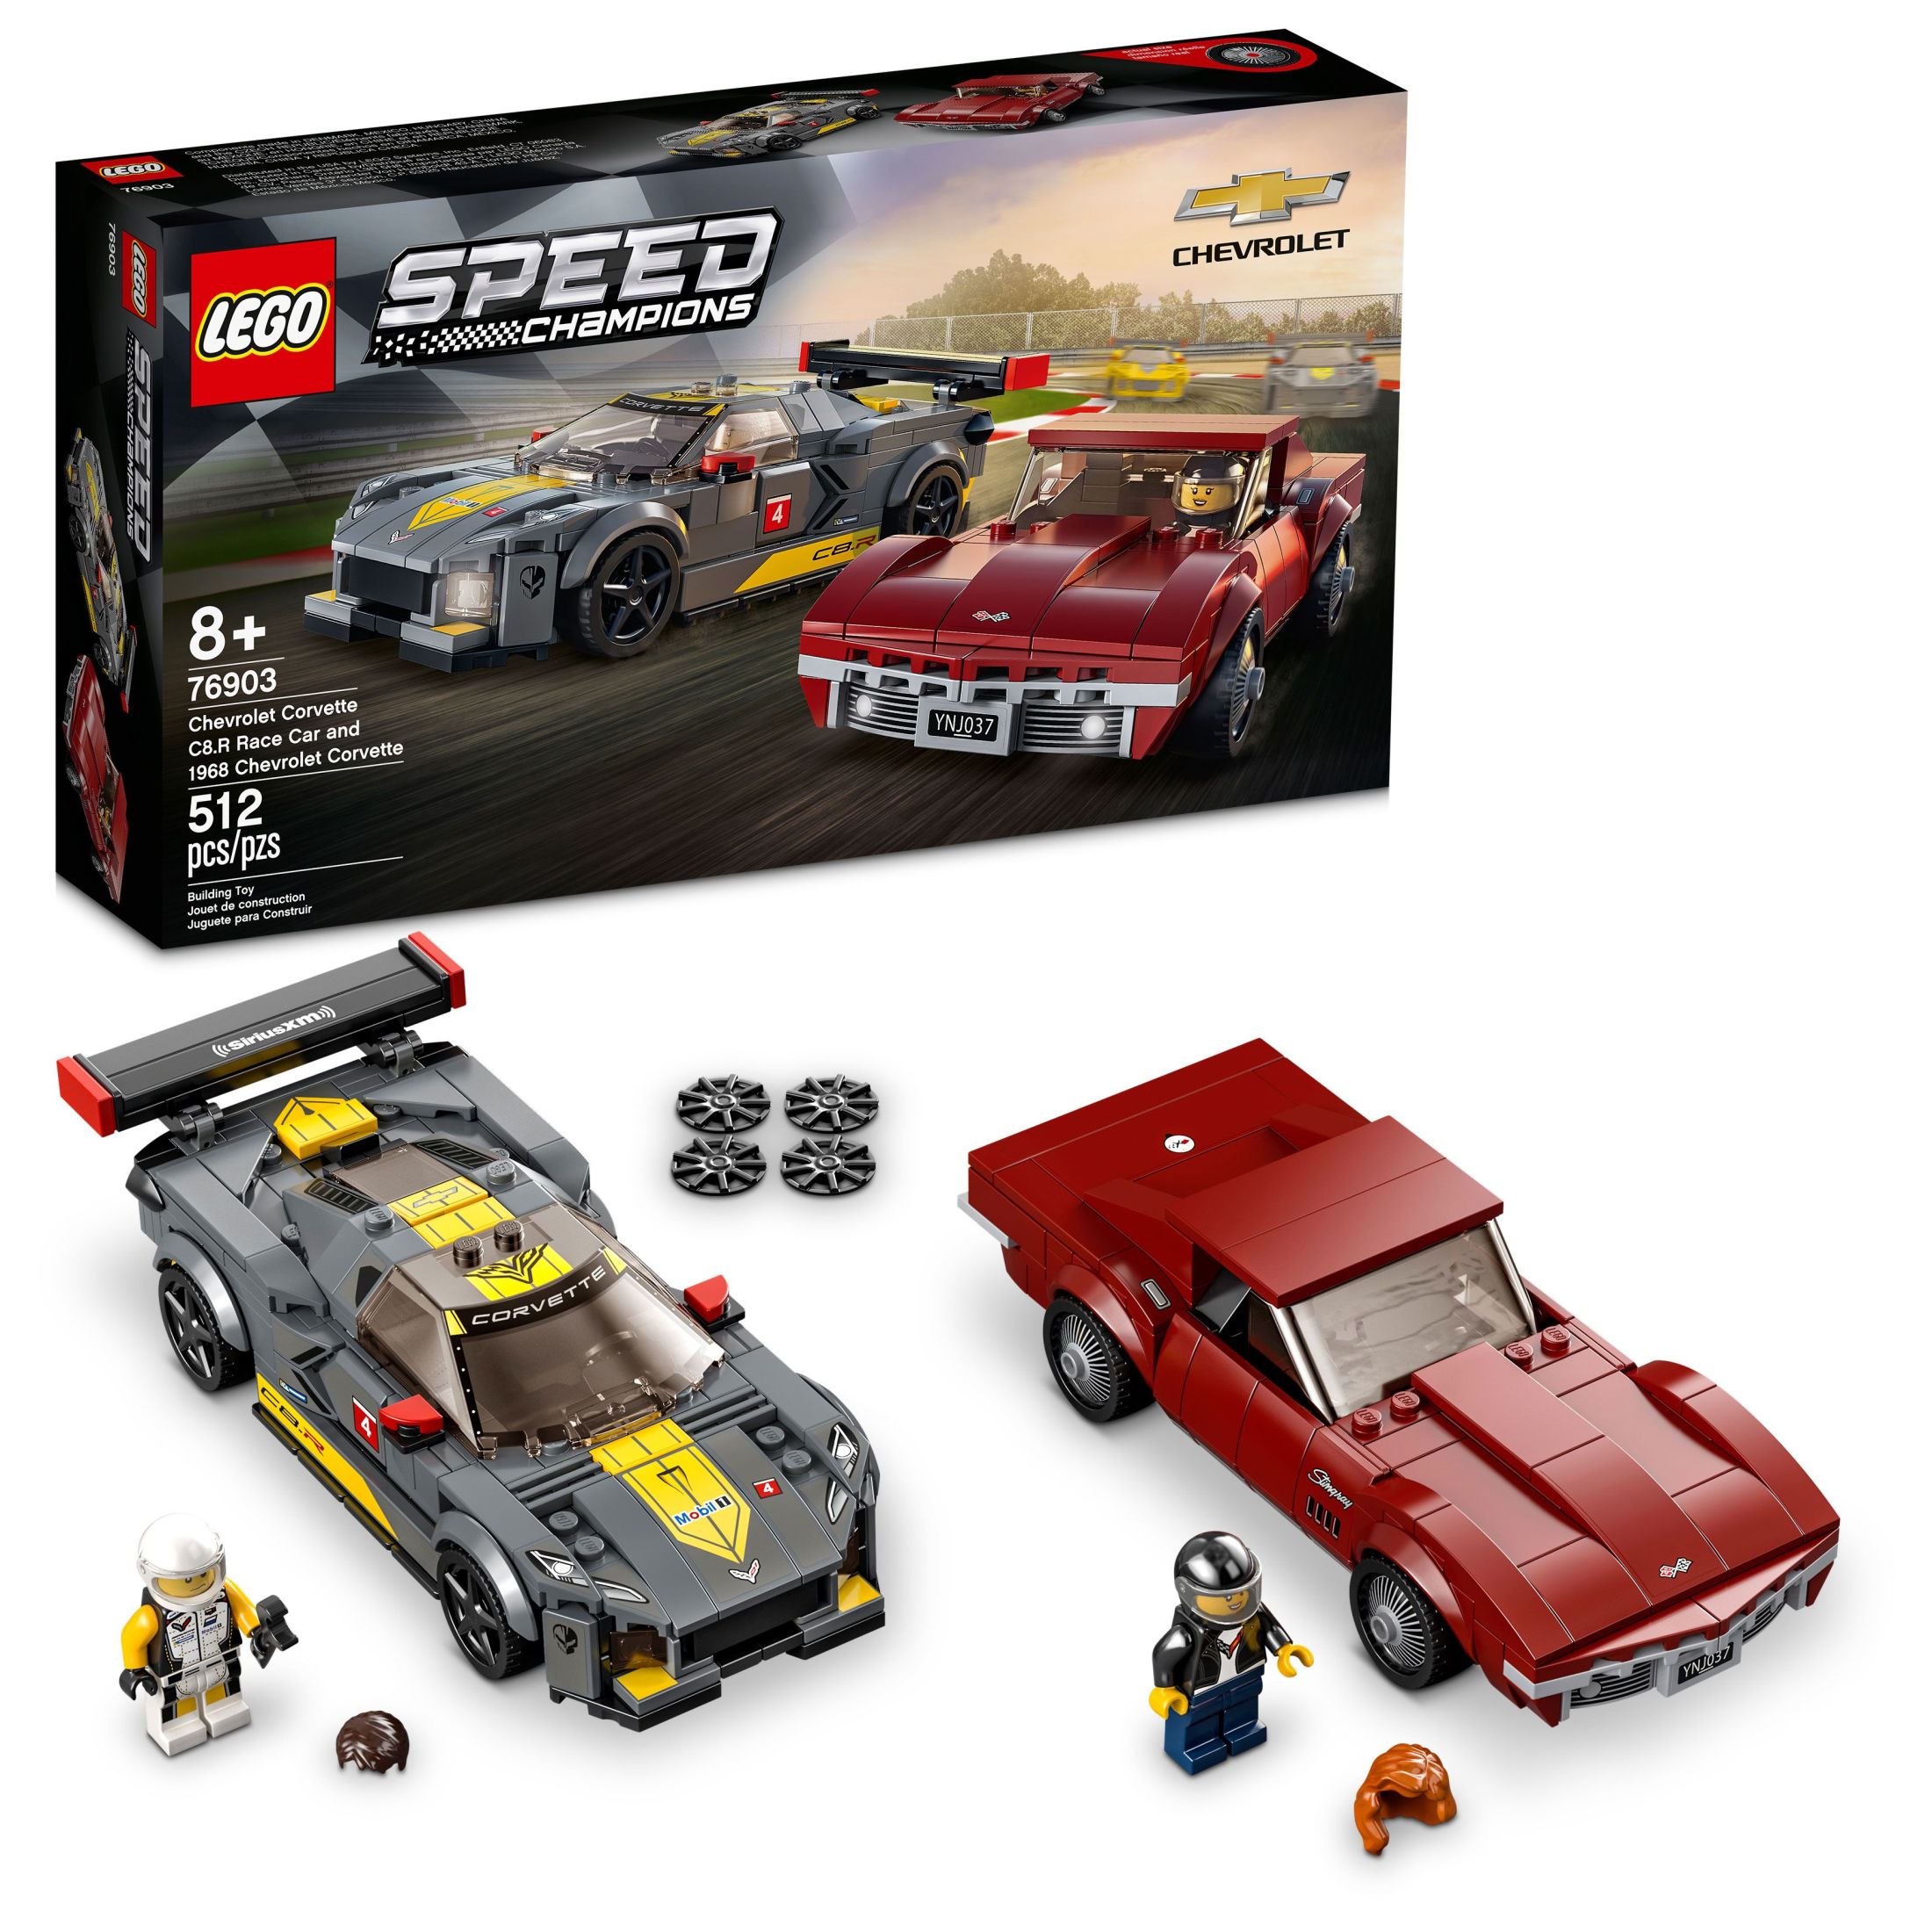 LEGO Speed Champions Chevrolet Corvette C8.R Race Car and 1969 Chevrolet Corvette 76903 Building Toy (512 Pieces) - image 1 of 8